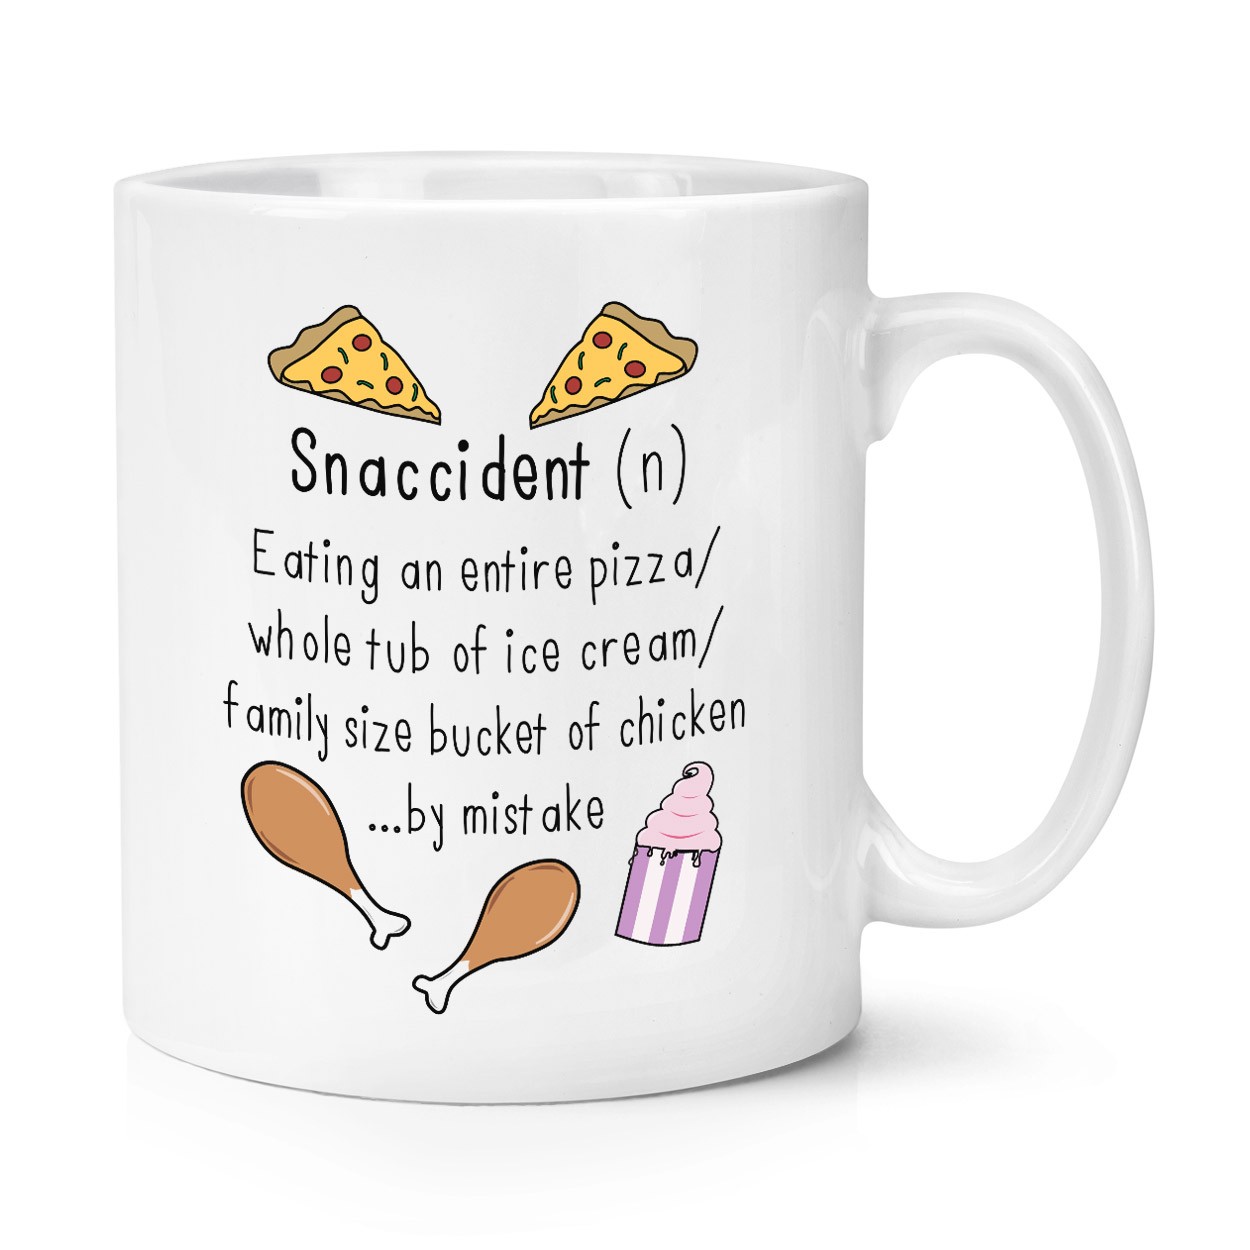 Snaccident Definition 10oz Mug Cup 